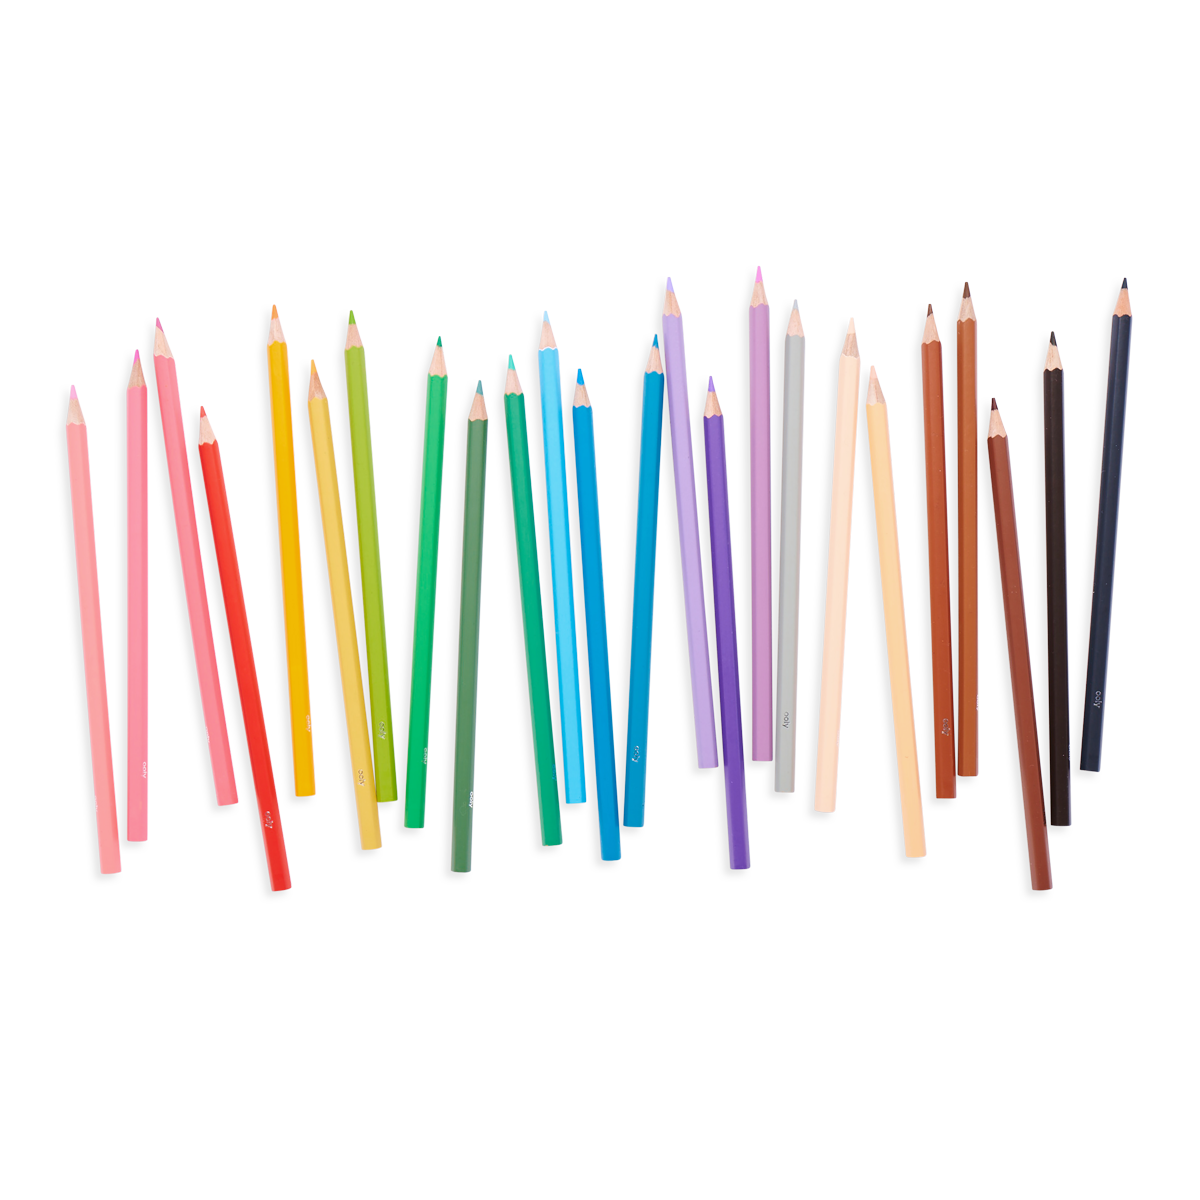 Bic Ballpoint Pens, Felt-Tip, Colouring Pencils, Crayons, Marker Pens,  Highlighters, Advent Calendar', Set of 24